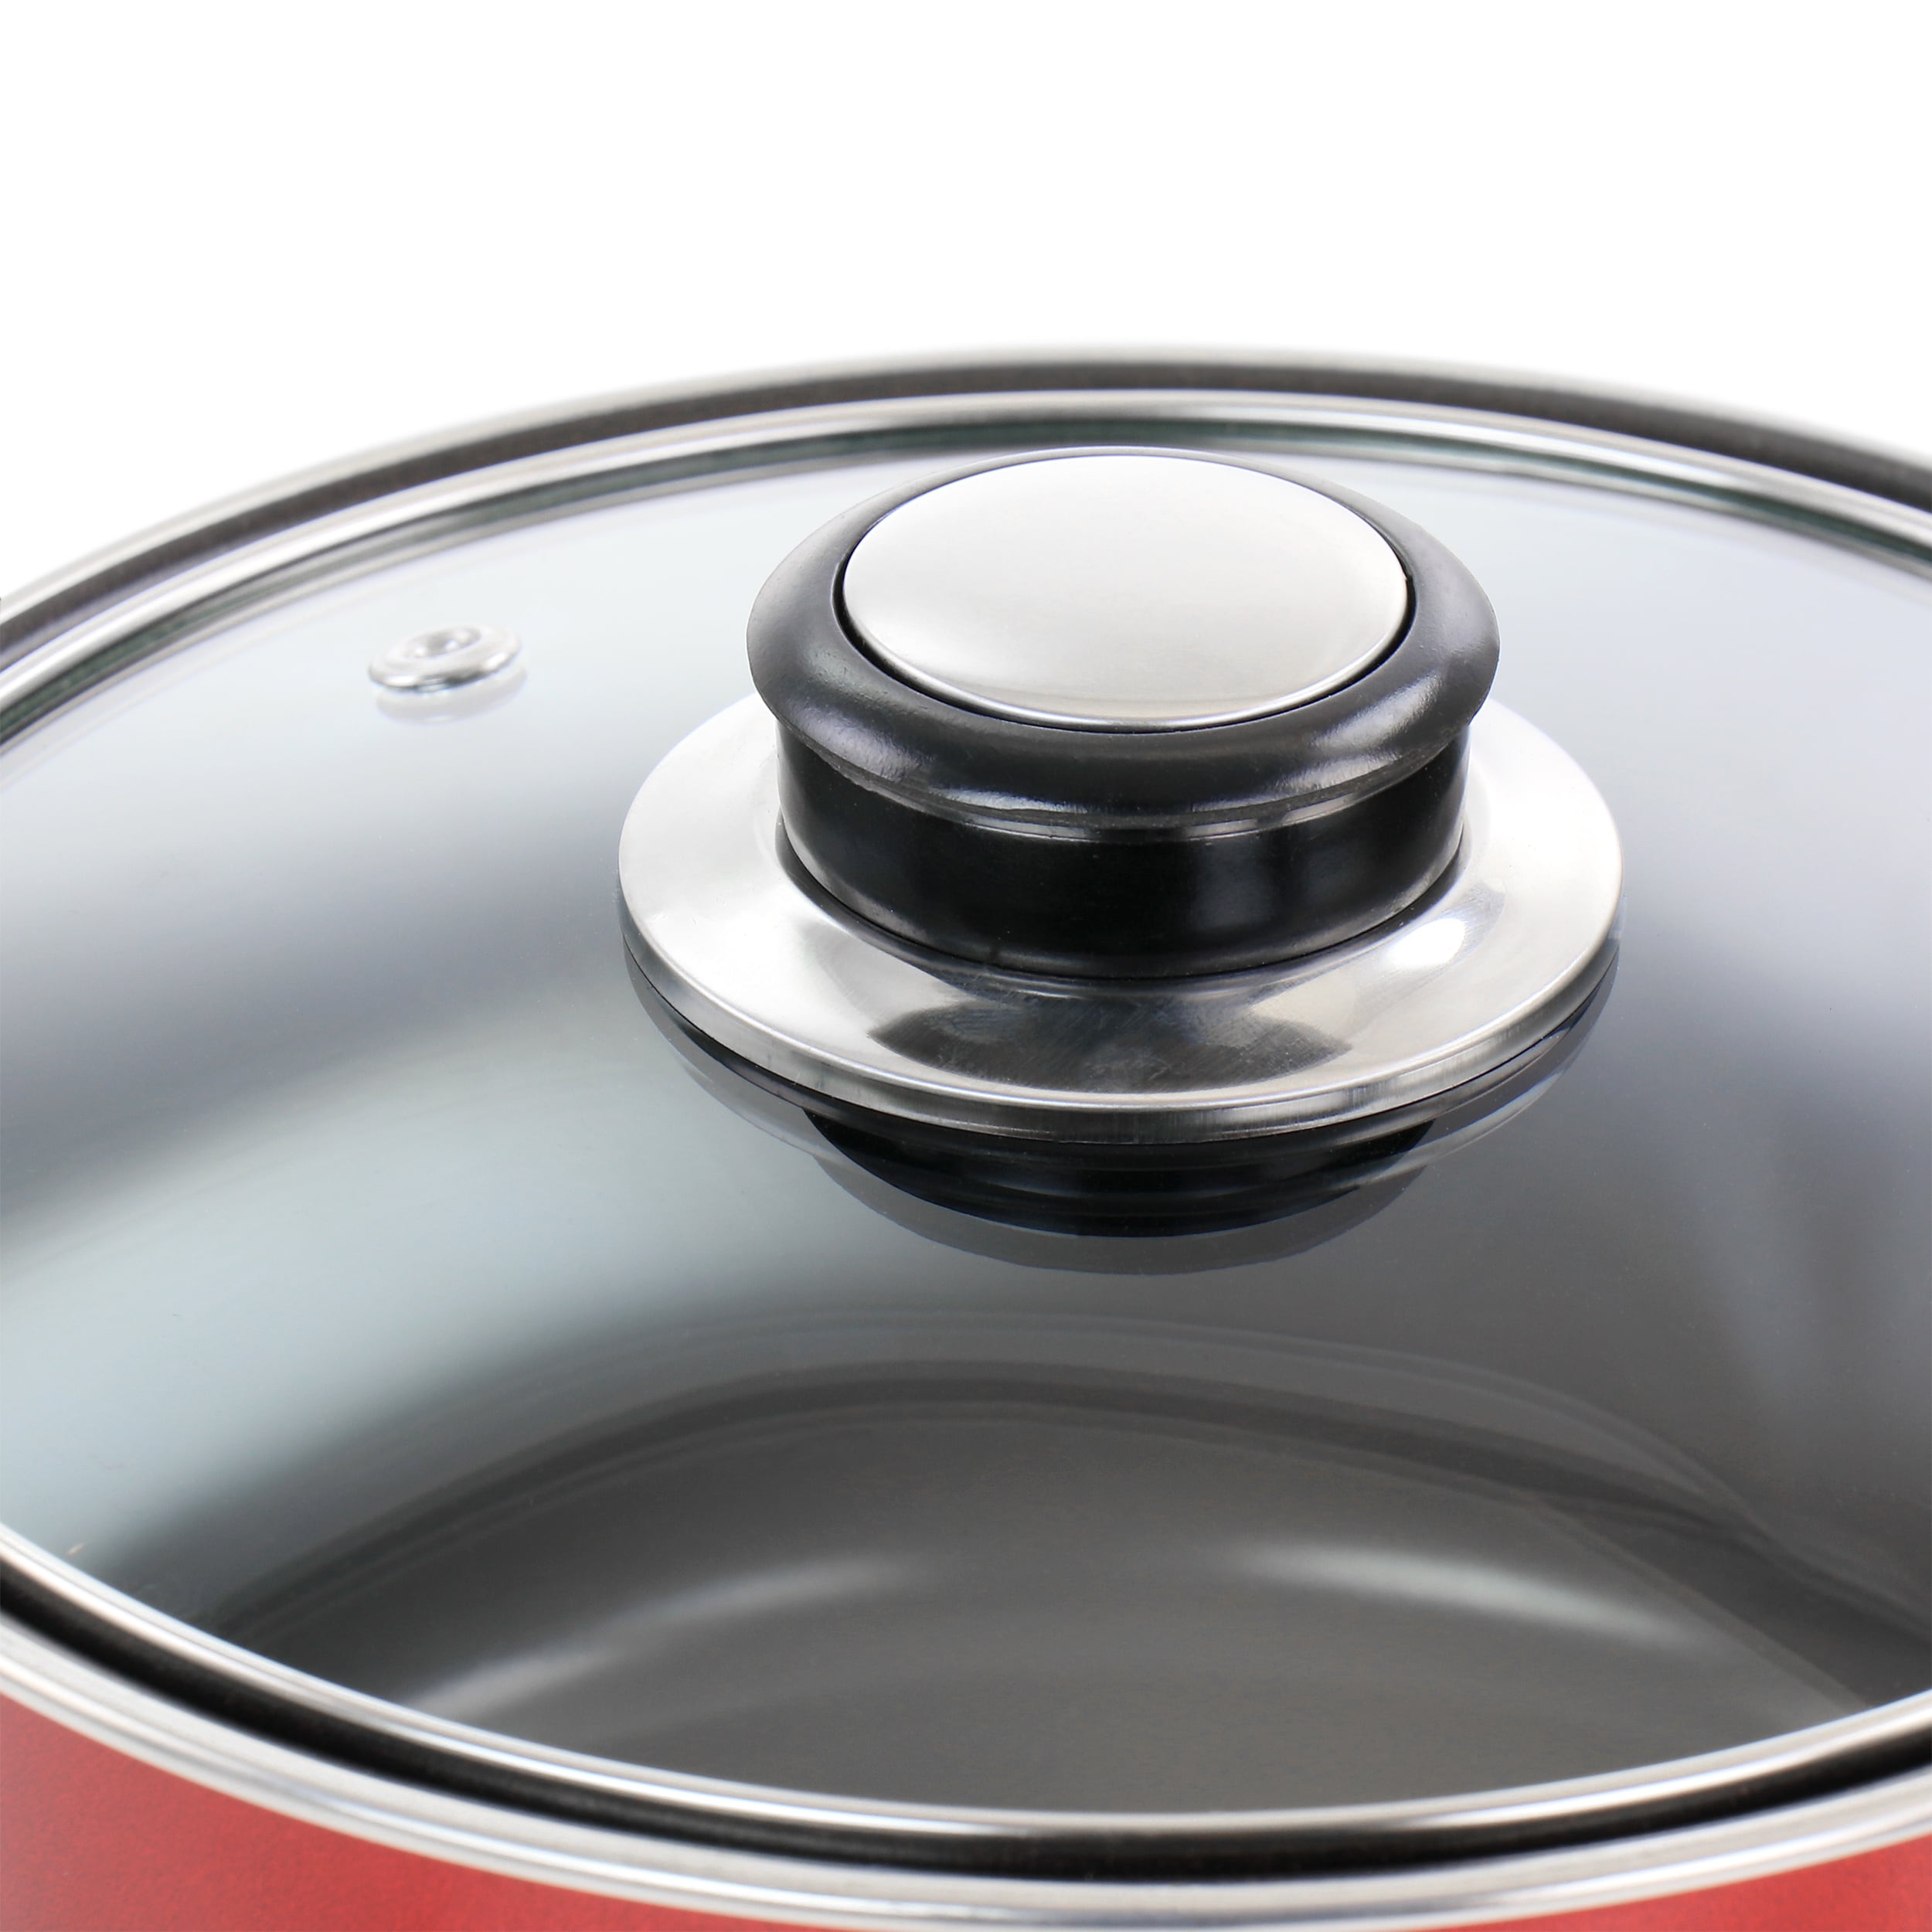 Ego Stackable Pot Set Stainless Steel - Cookware Sets Aluminium - 700111